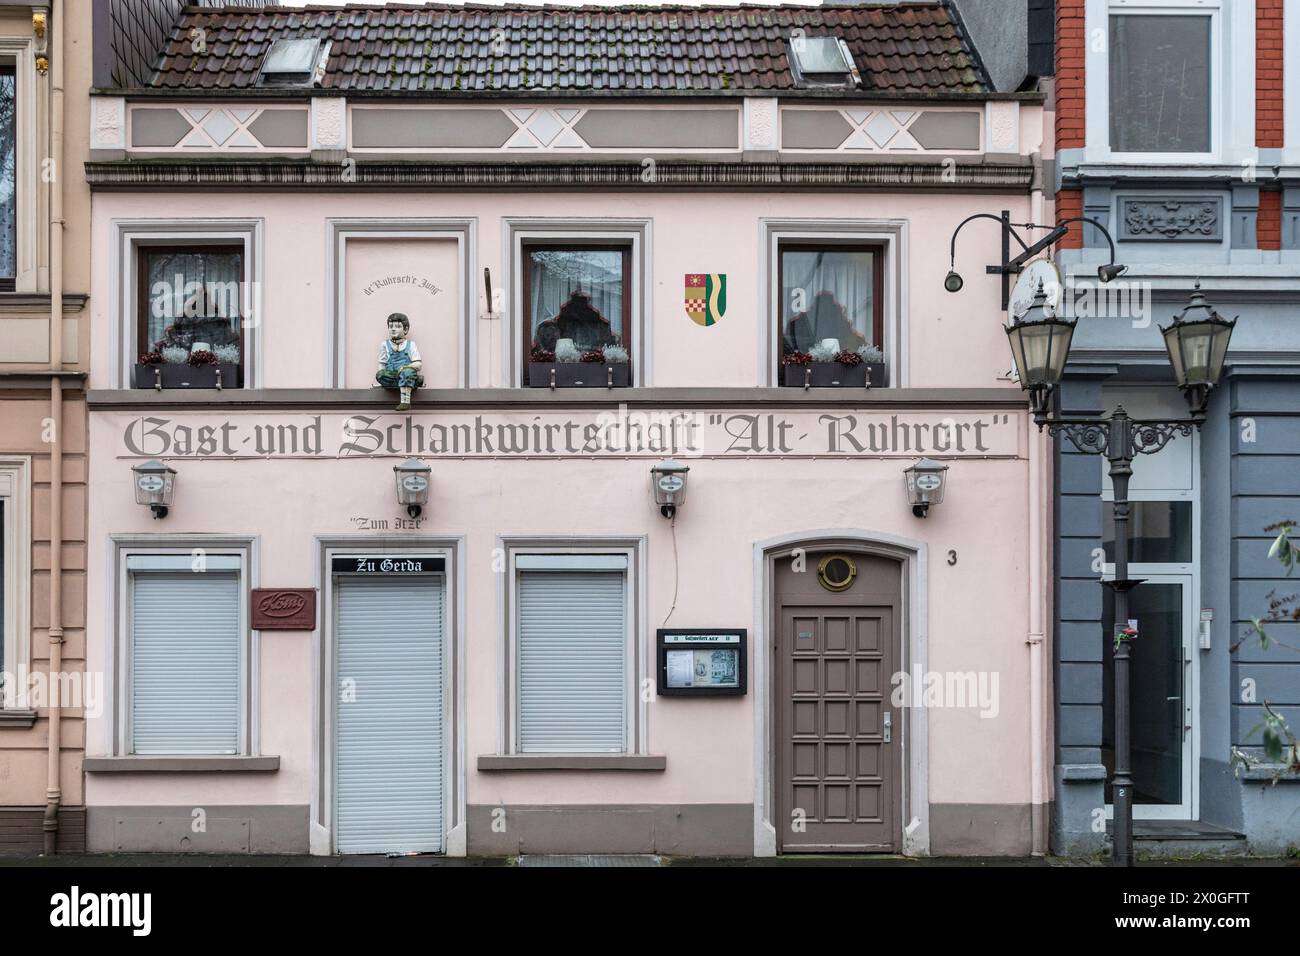 'Zum Itze' previously 'Alt Ruhrort' iconic Pub in Neumarkt, Duisburg Ruhrort, Ruhr Area, Germany Stock Photo